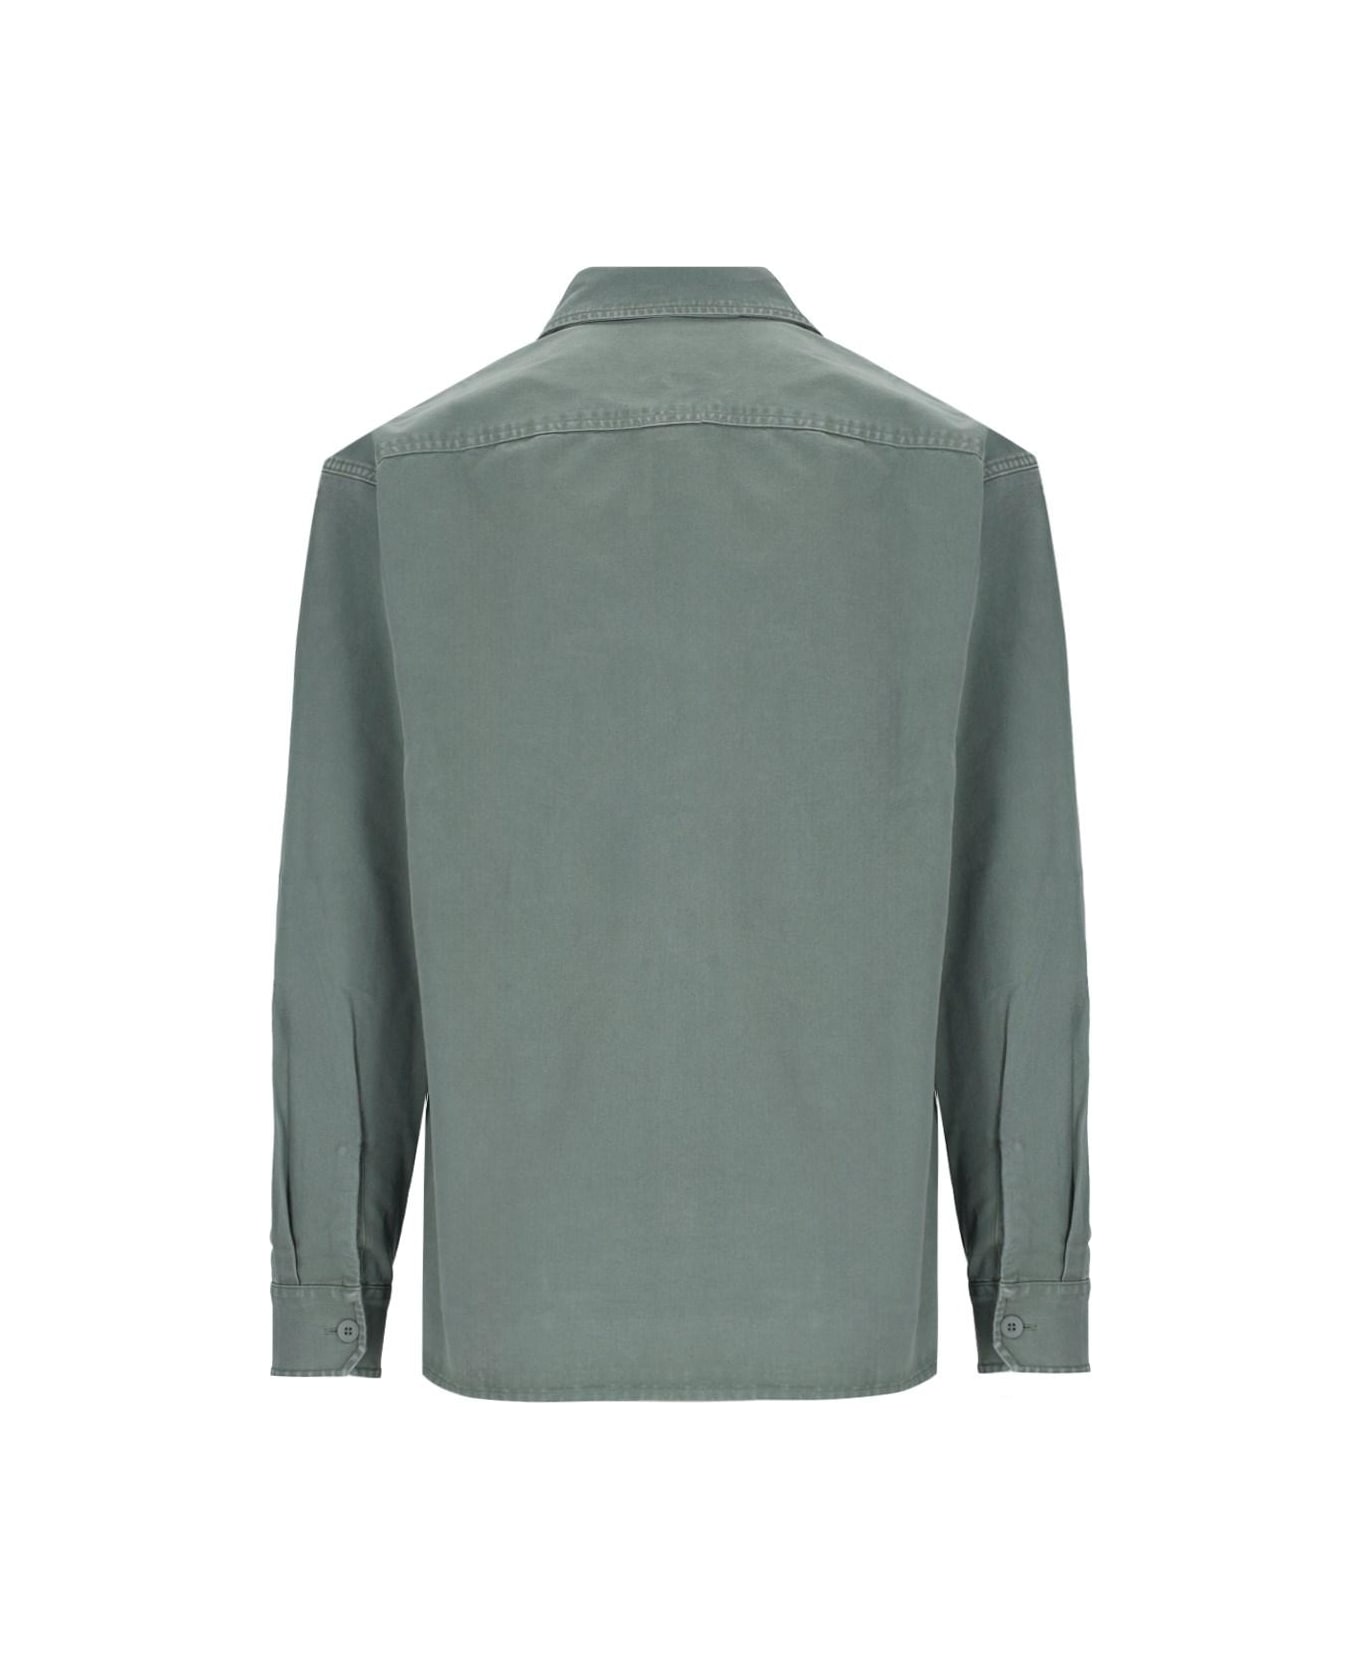 Carhartt 'reno' Shirt Jacket - Verde